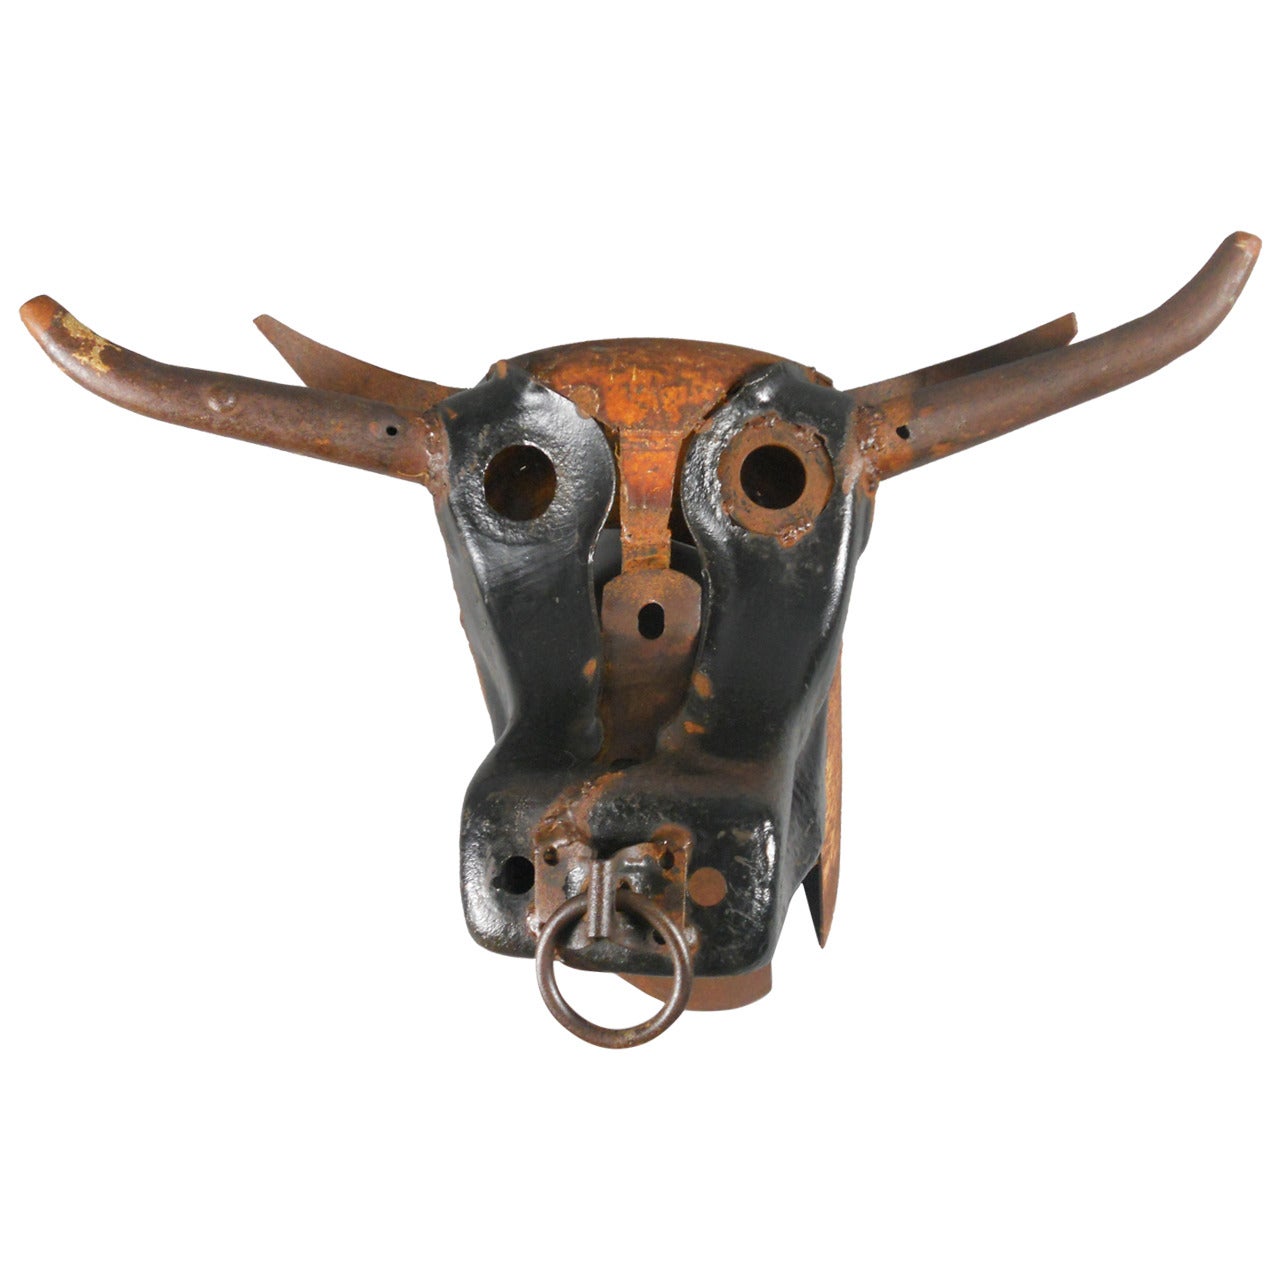 Metal Sculpture of a Bull's Head by Jim Hamm